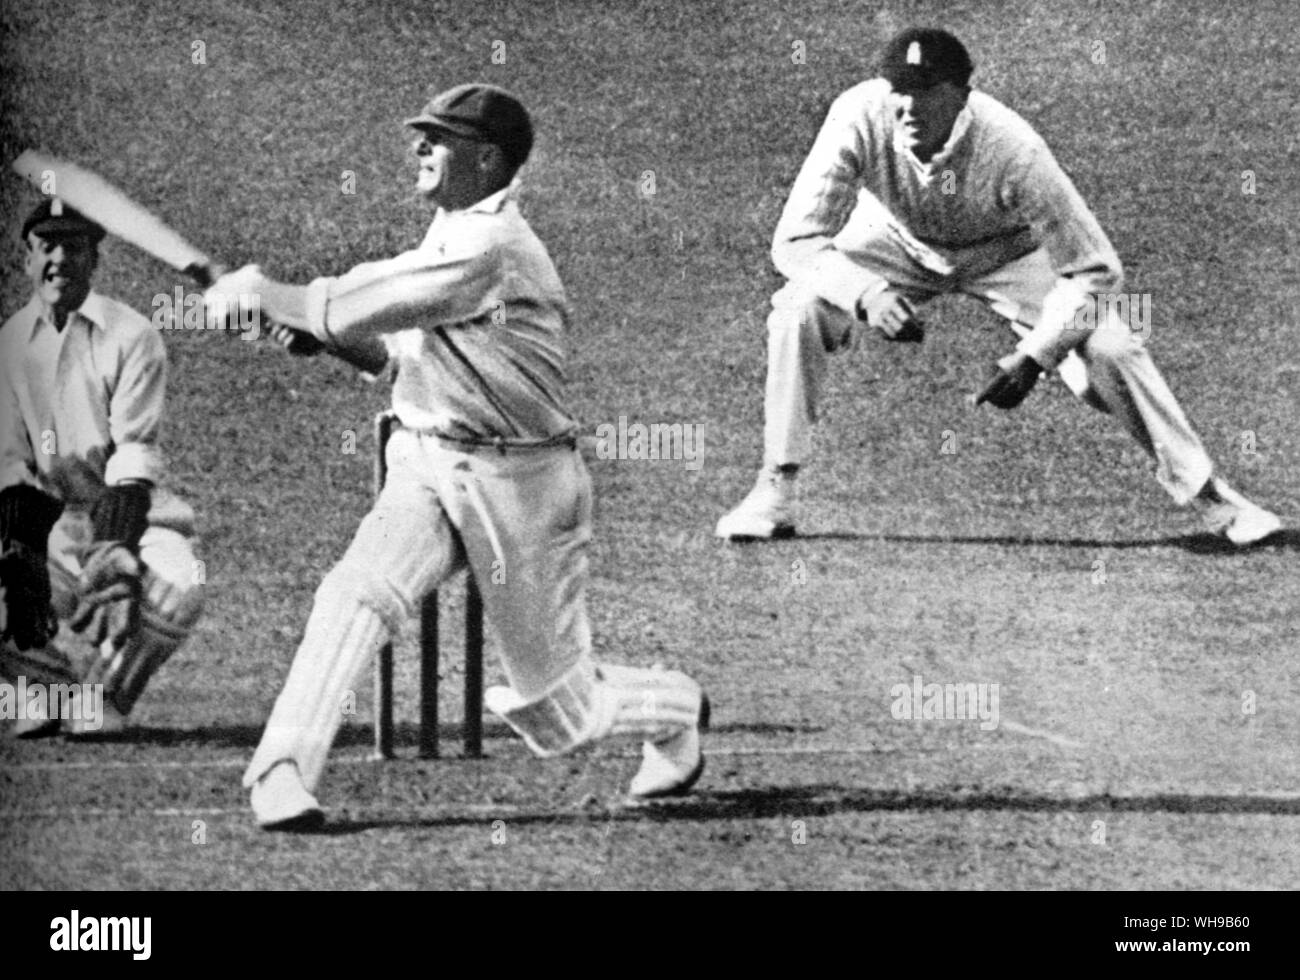 W Bardsley batting v England in Nottingham 1921 Uhr Strudwick ist Wicket Keeper, F E Woolley bei Schlupf Stockfoto